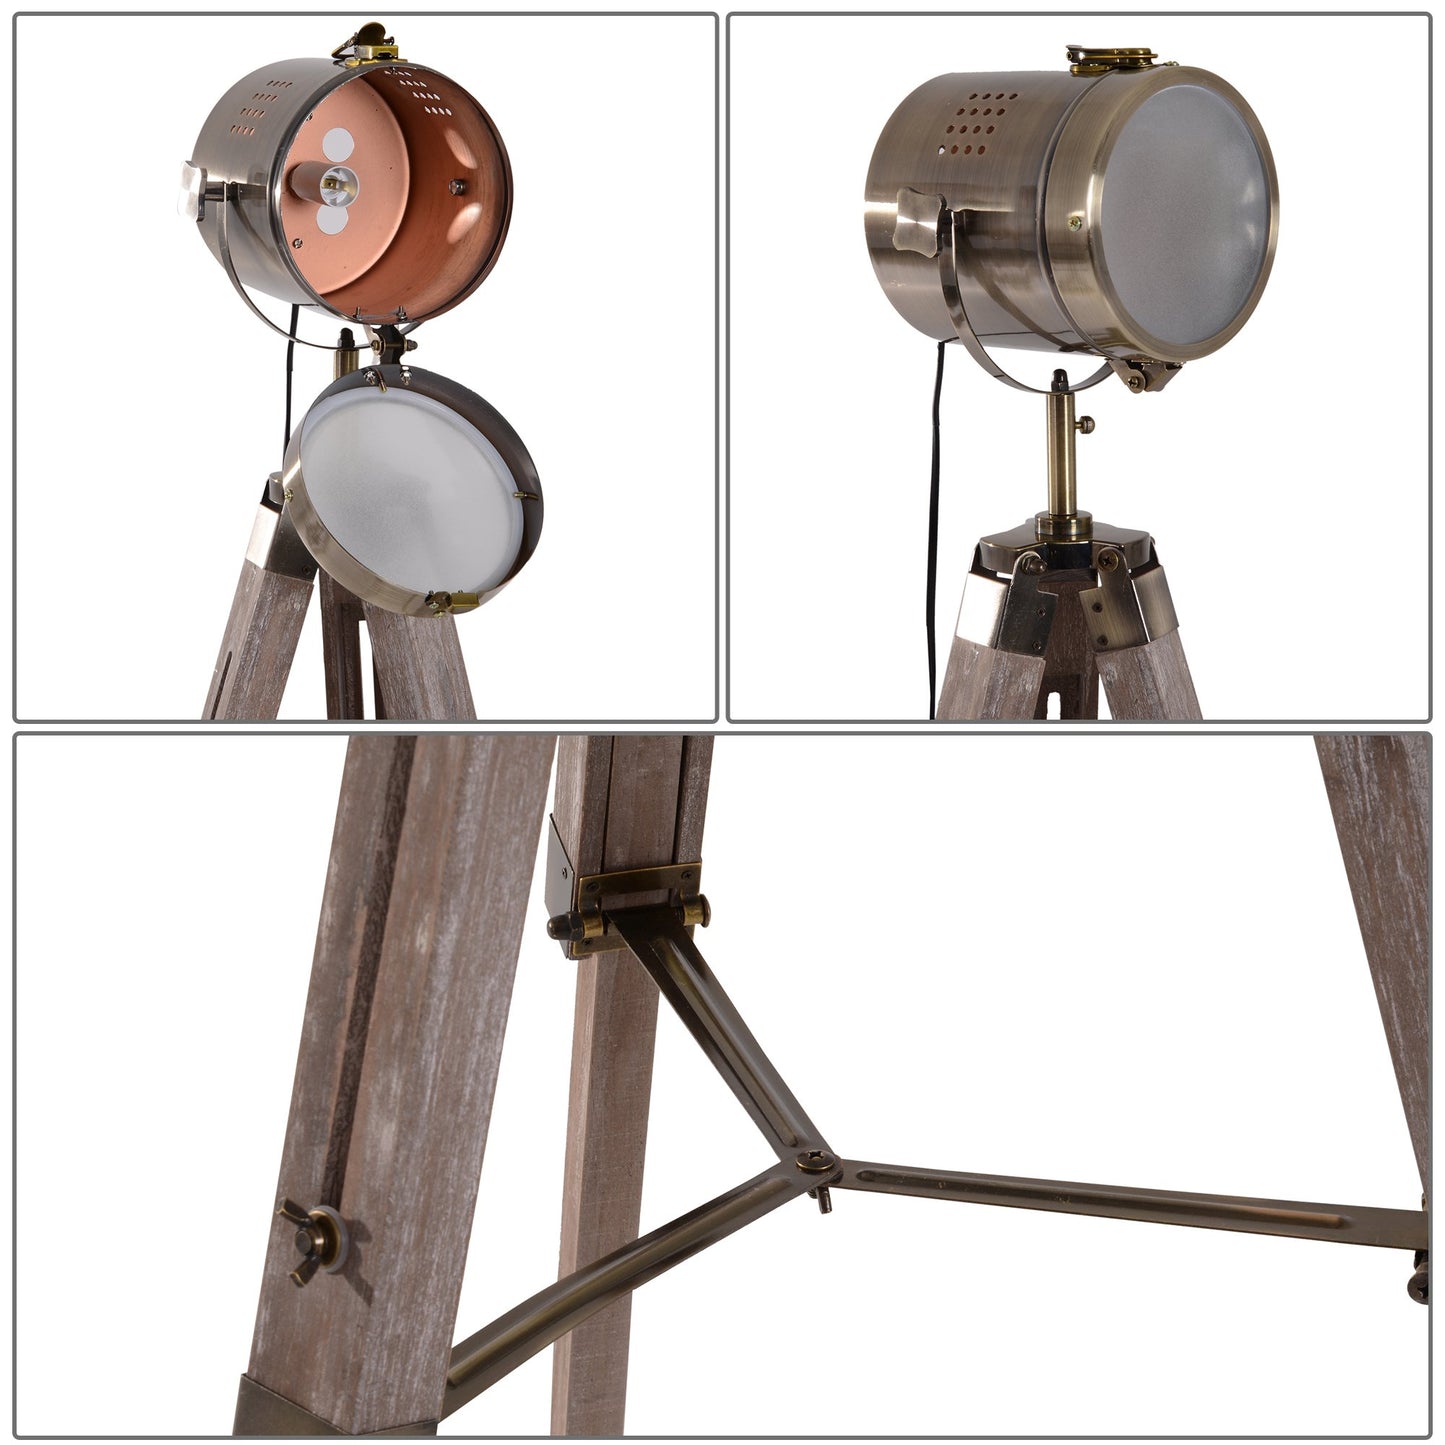 HOMCOM Vintage Tripod Floor Lamp, 65L, Modern Adjustable Height Tall Table Lamp for Living Room Bedroom-Wood/Bronze Colour